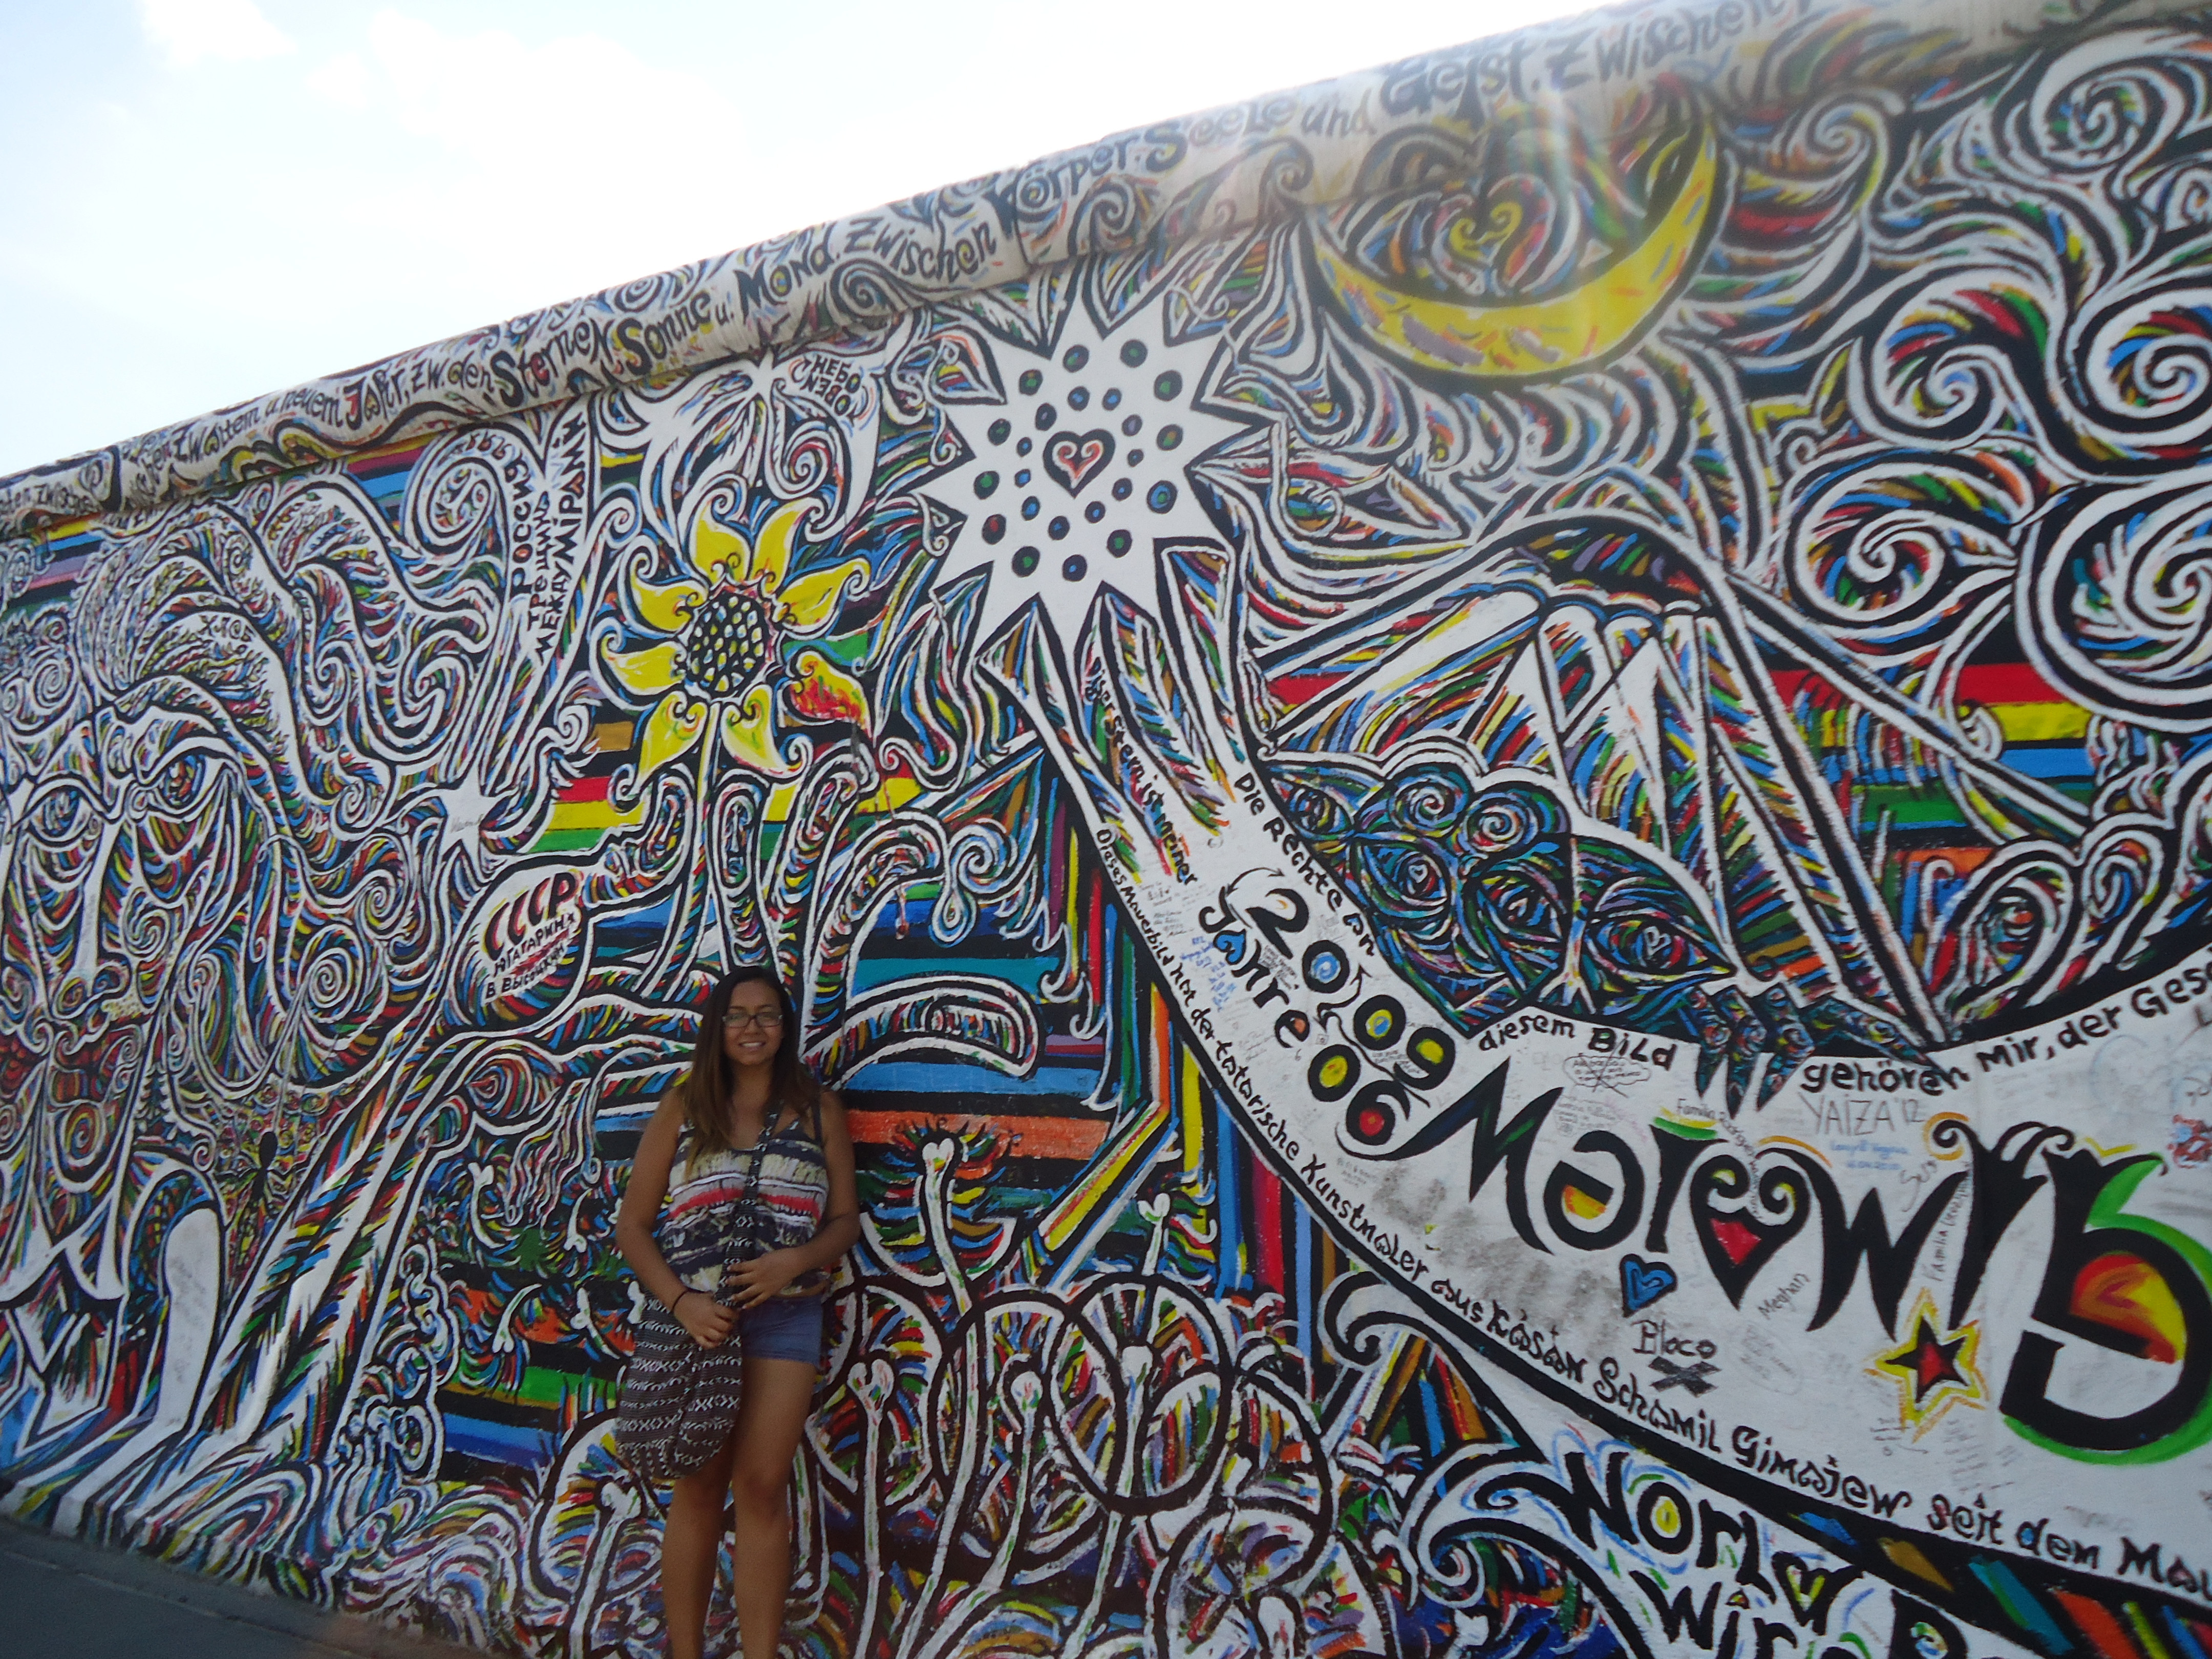 Best ideas about Berlin Wall Art
. Save or Pin Berlin Wall Art Now.